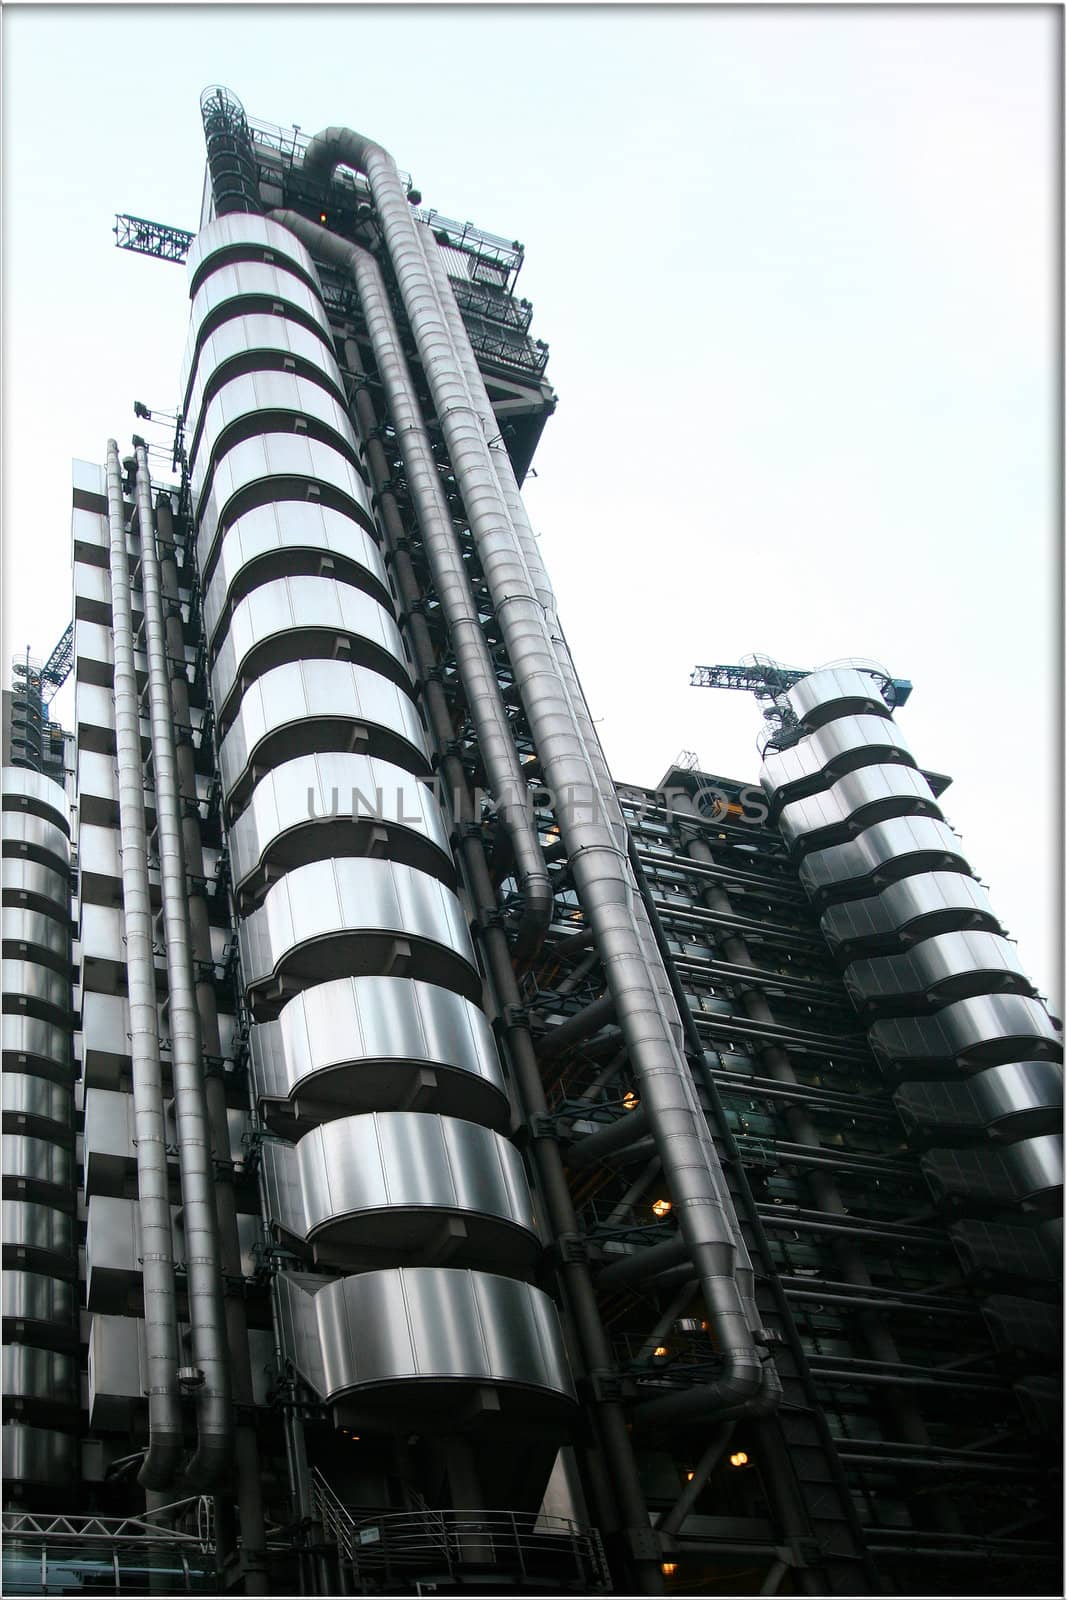 Lloyds Of London by Imagecom